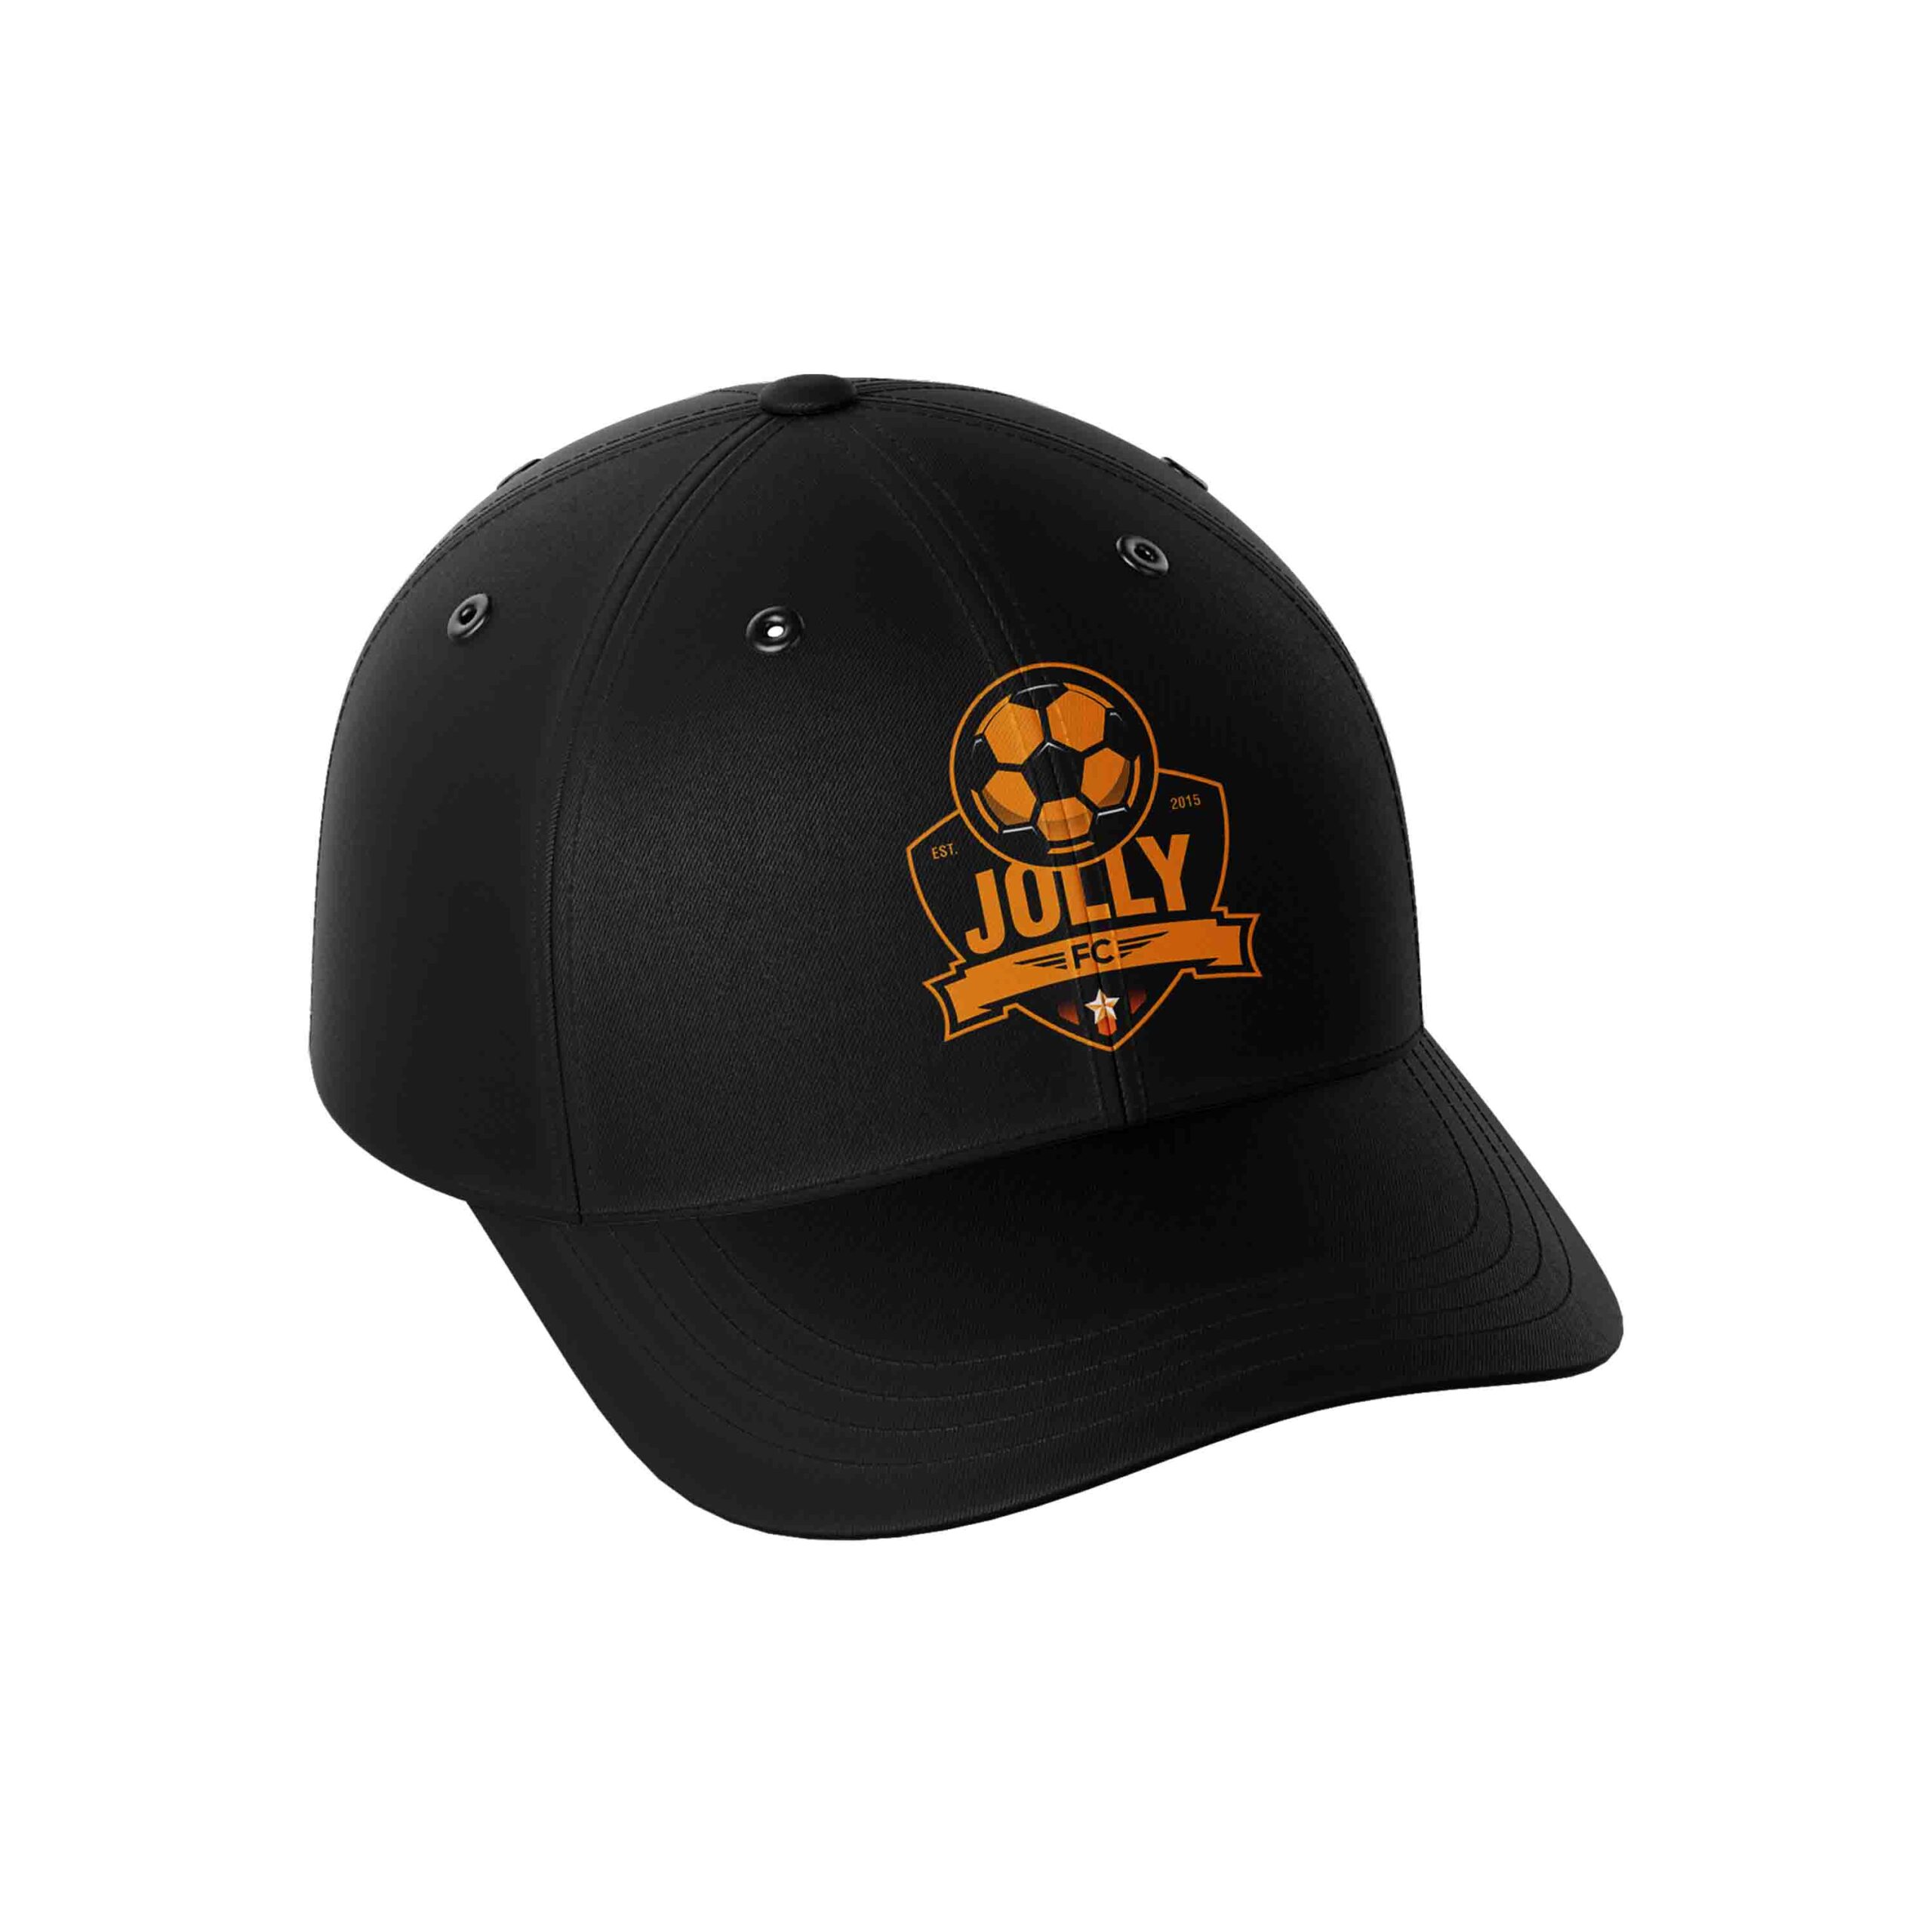 Jolly F.C. Merch cap black